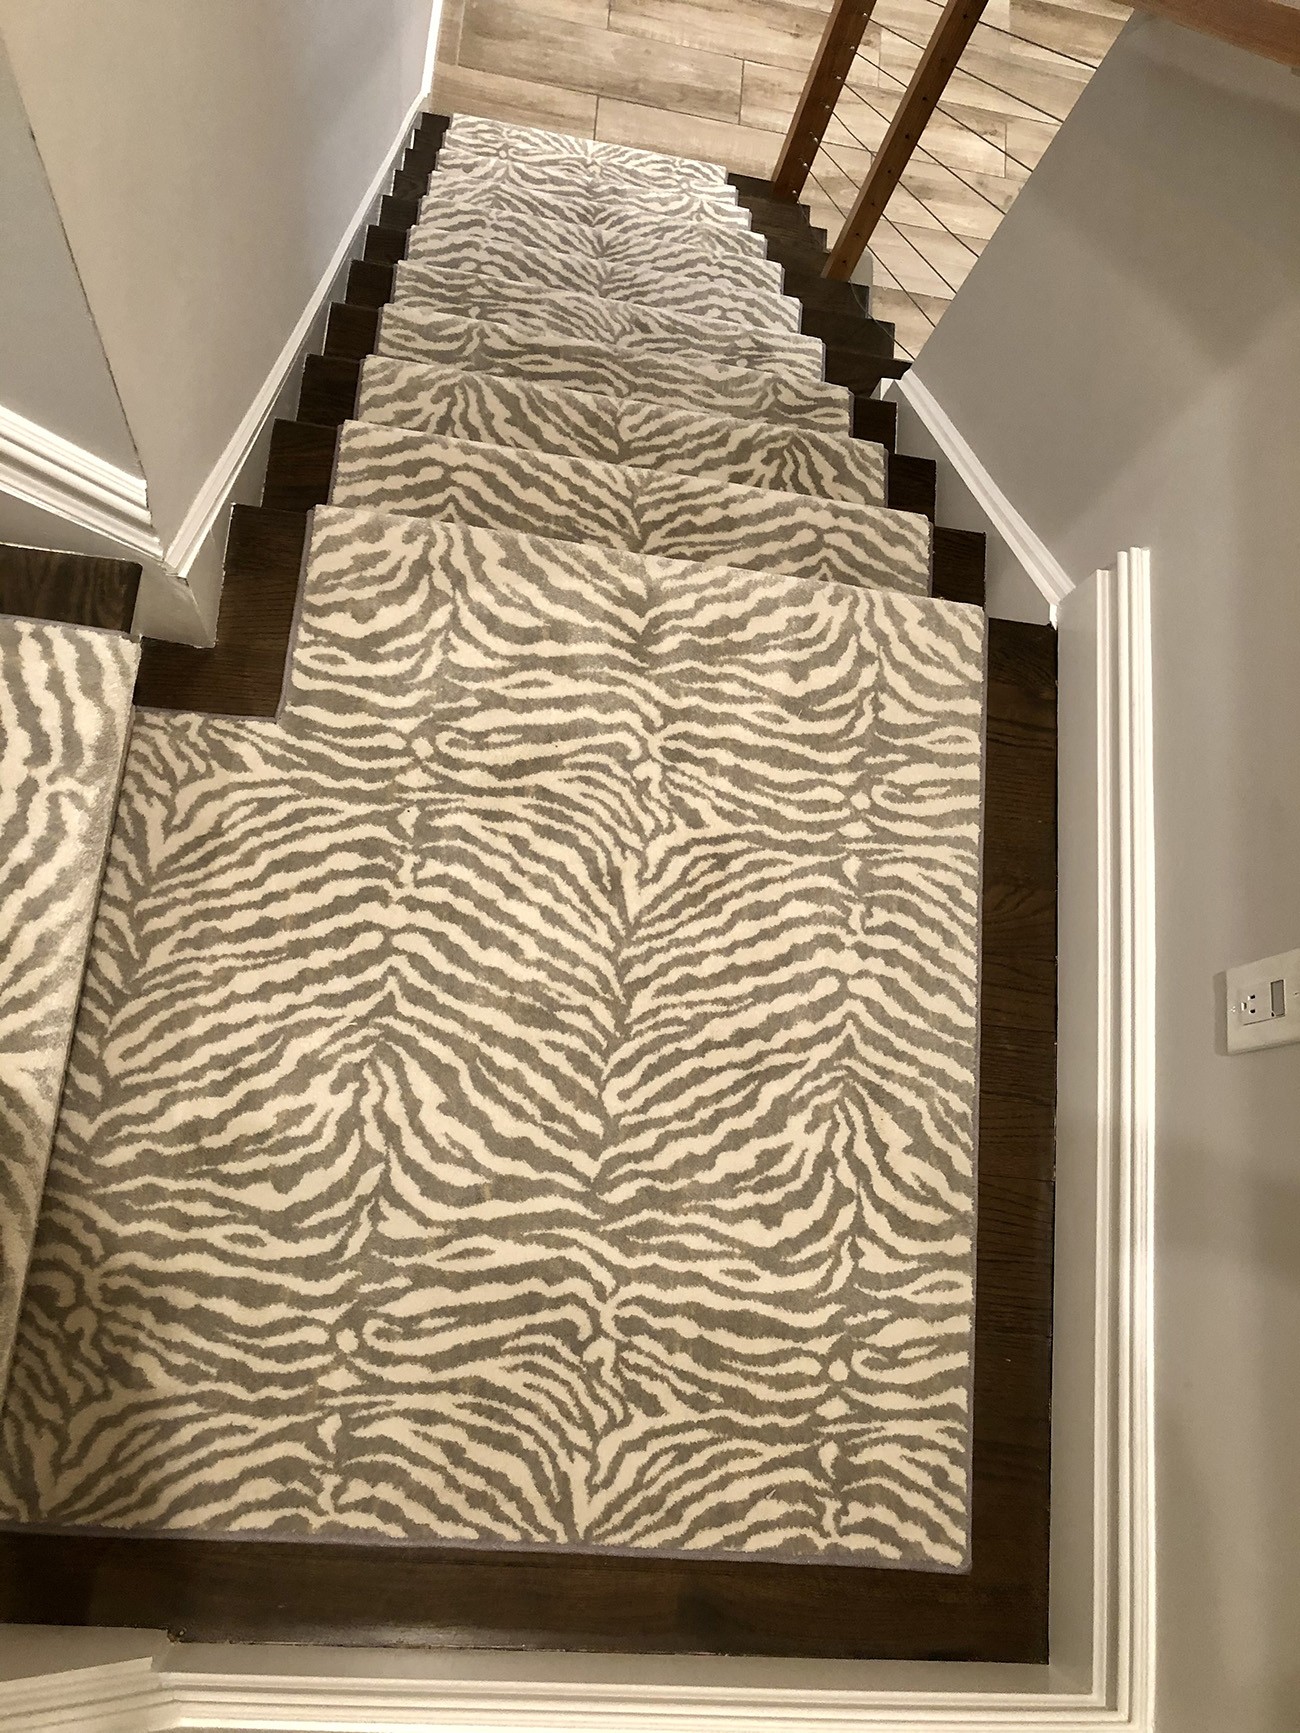 Stairway carpet runner